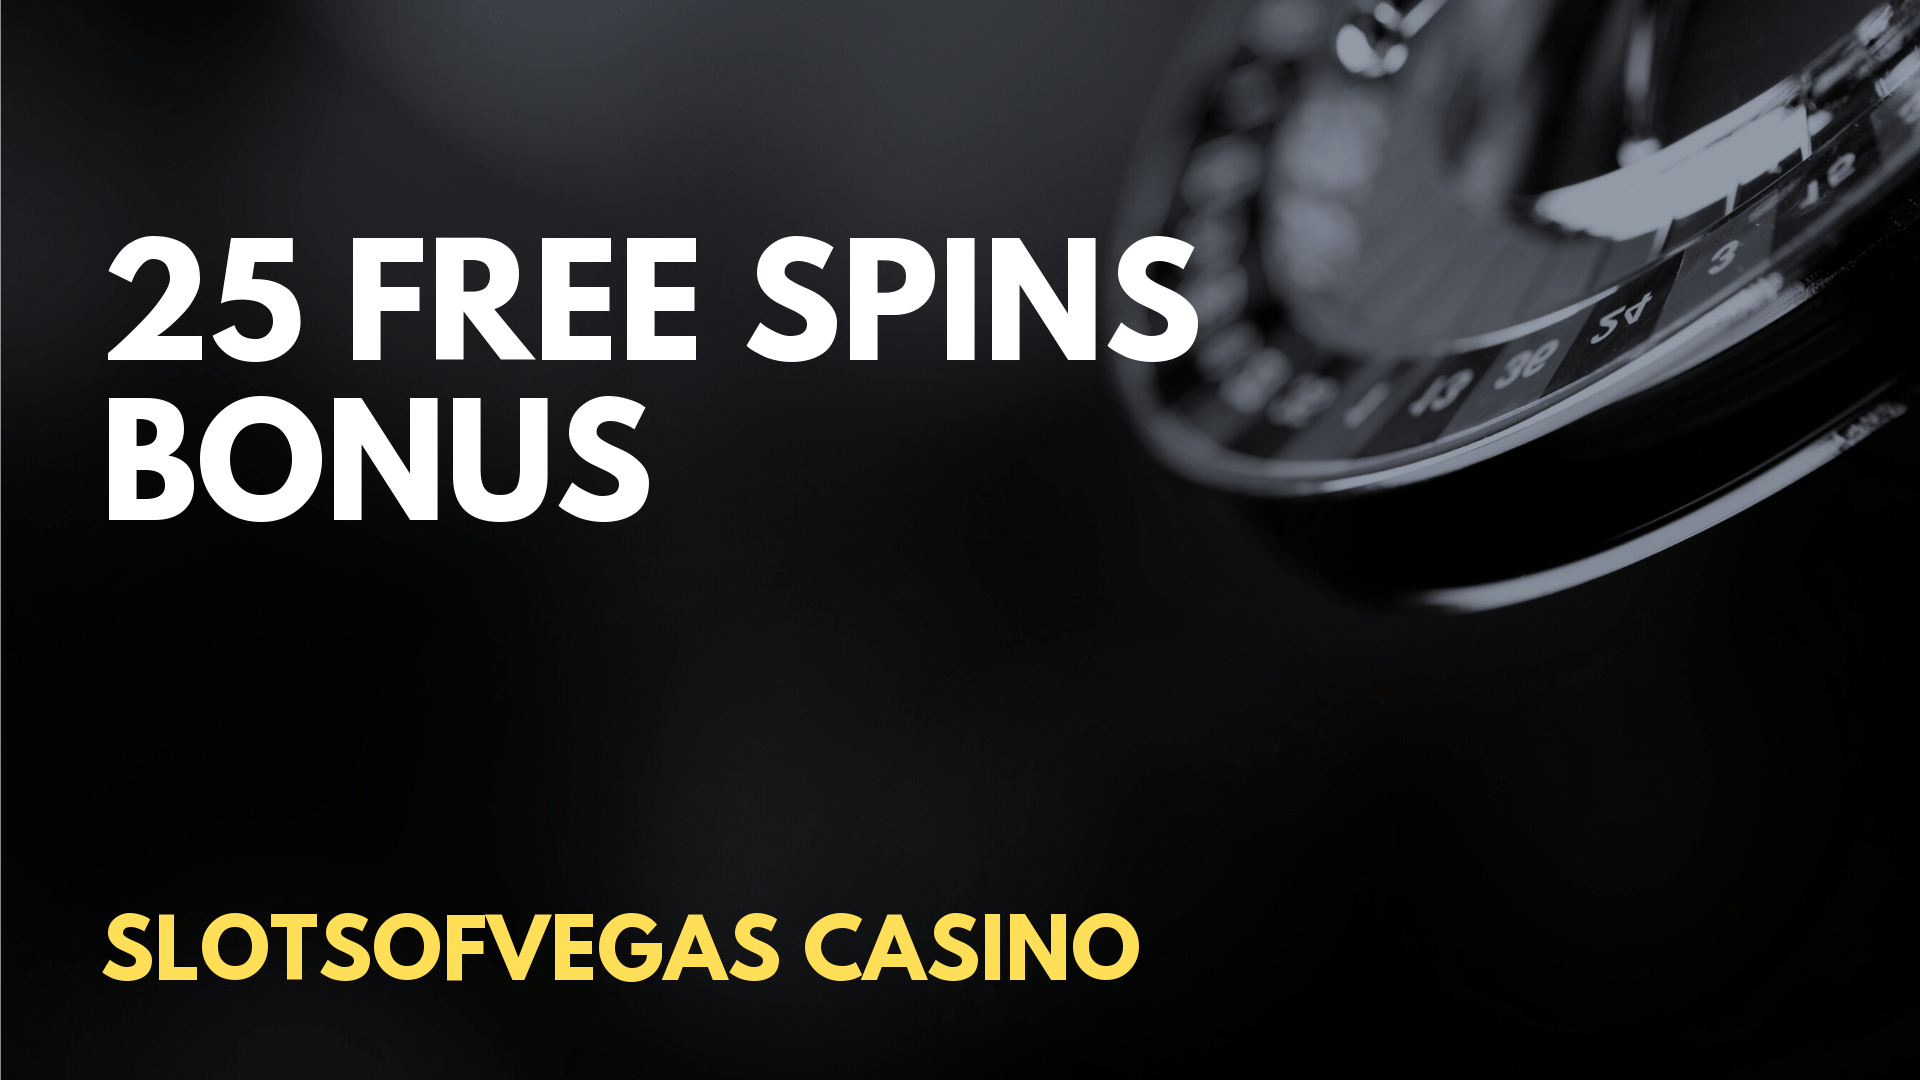 new no deposit free spins casino